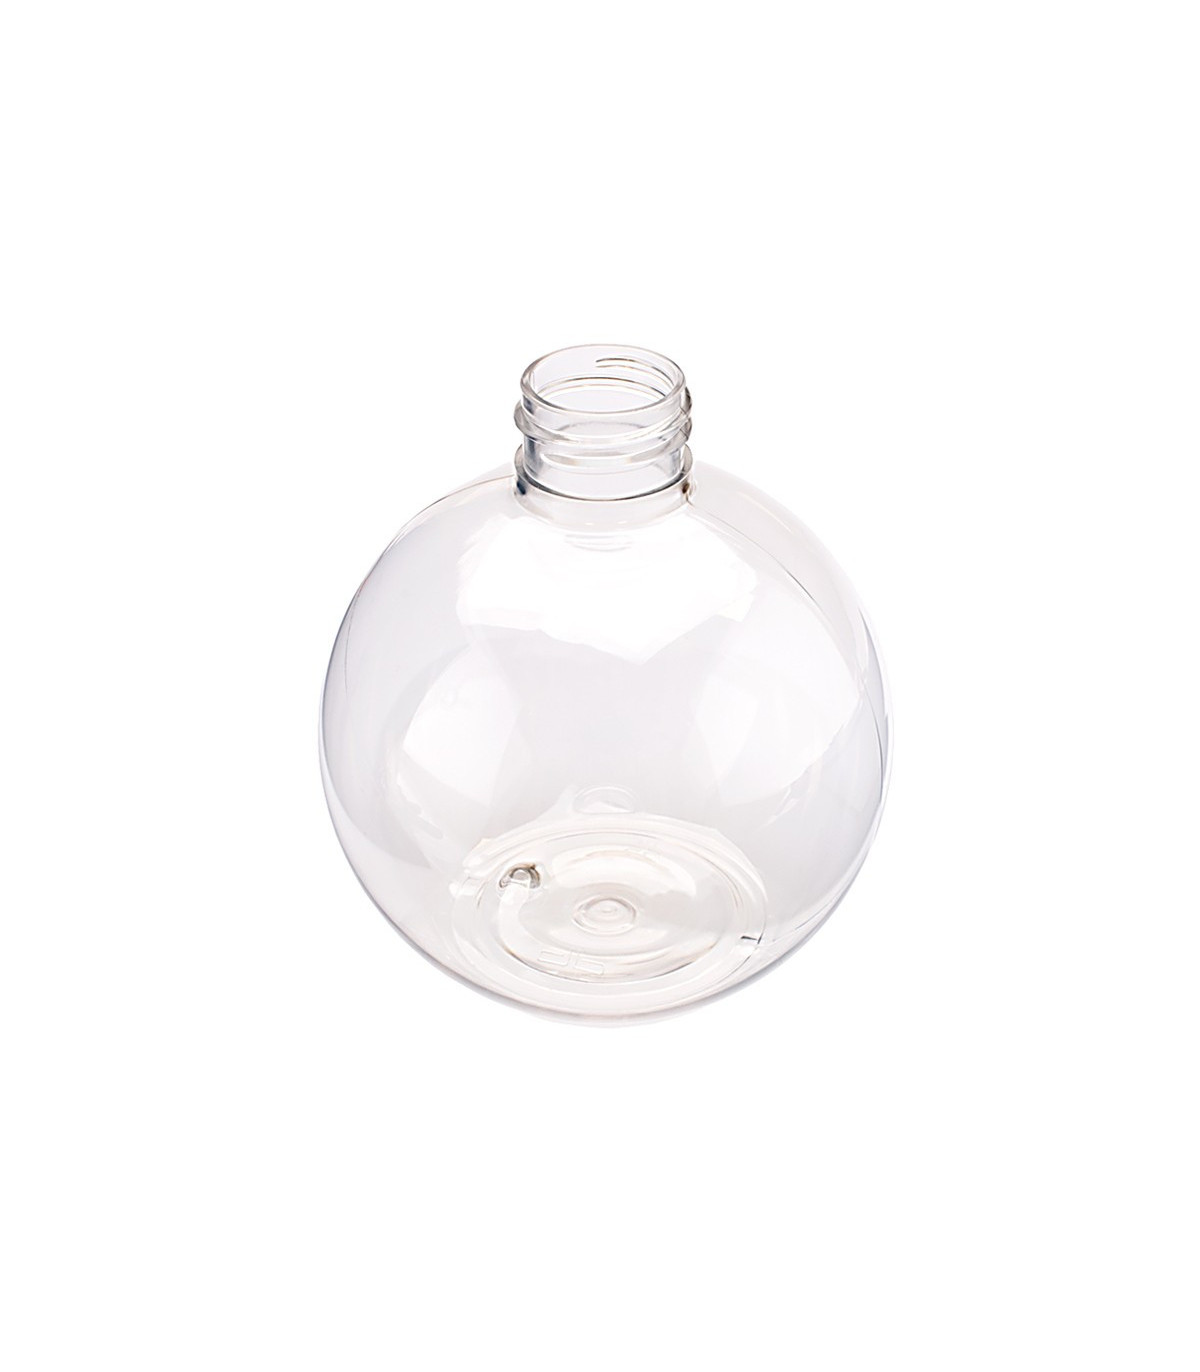 Nachfüllbare 250ml PET-Flasche Alcon - parfum flakon leer